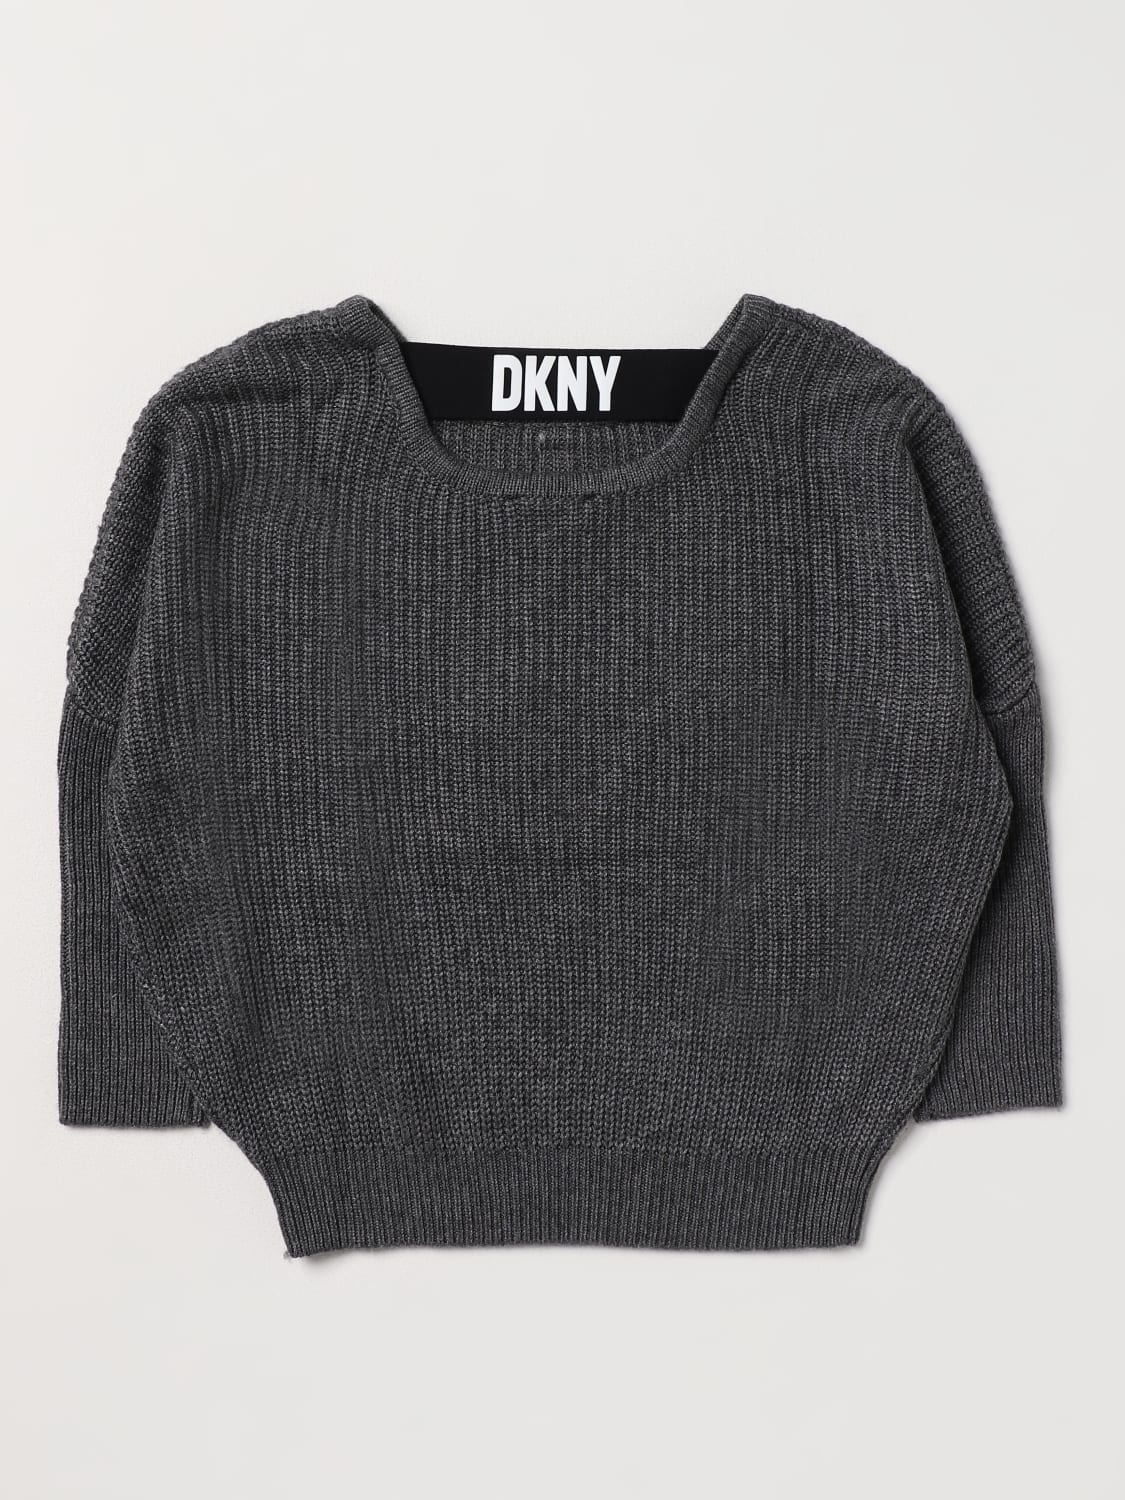 DKNY セーター - ニット/セーター